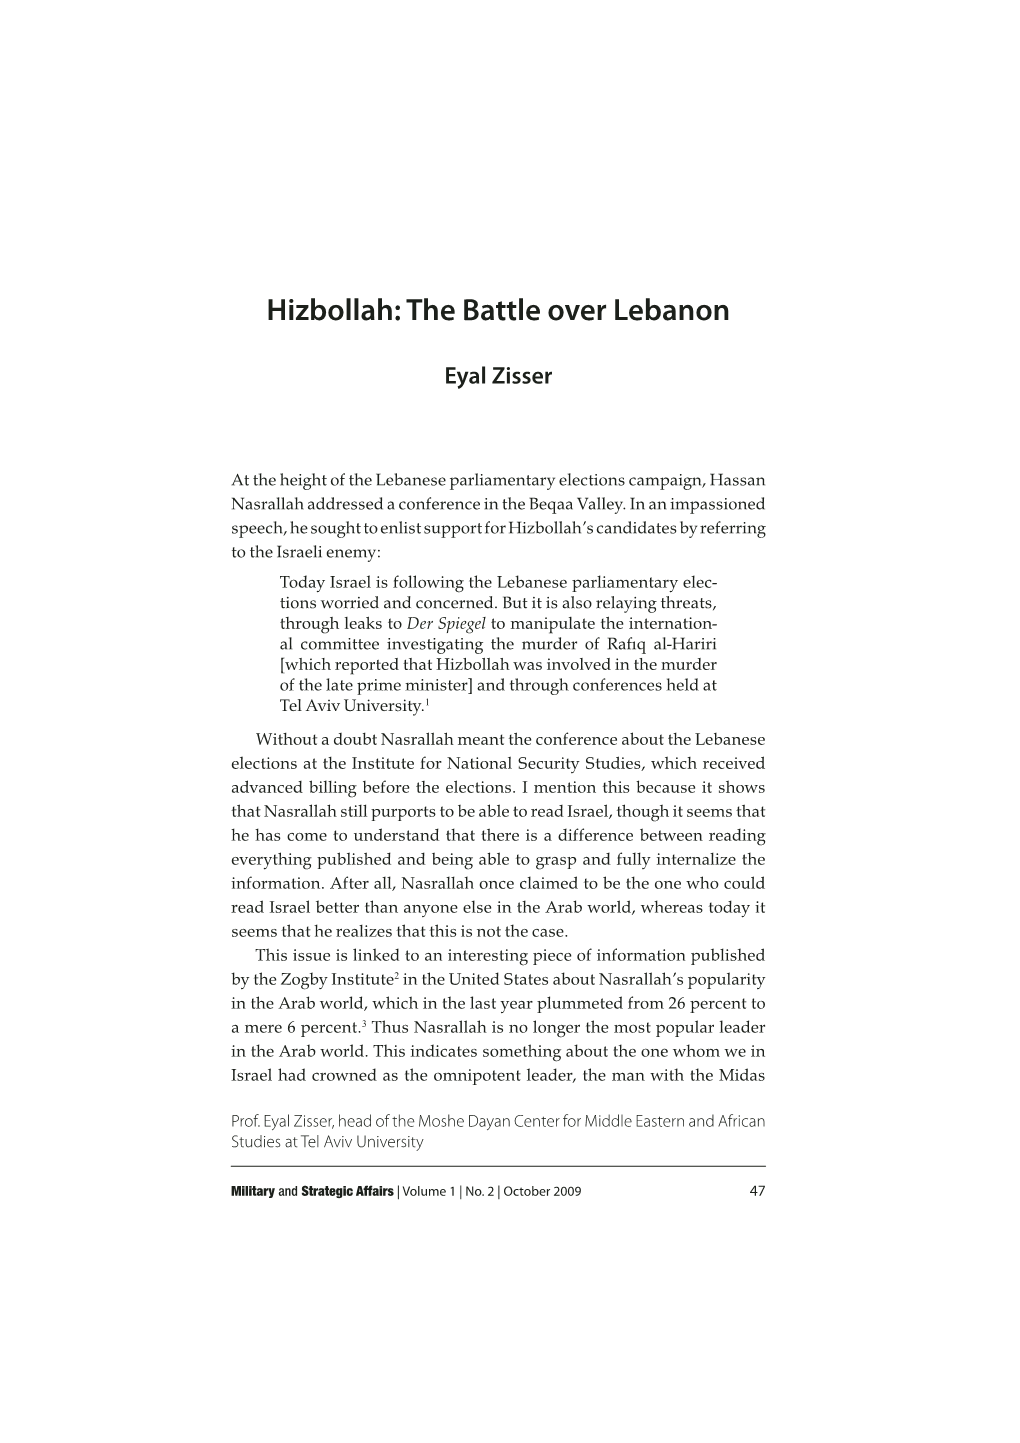 Hizbollah: the Battle Over Lebanon